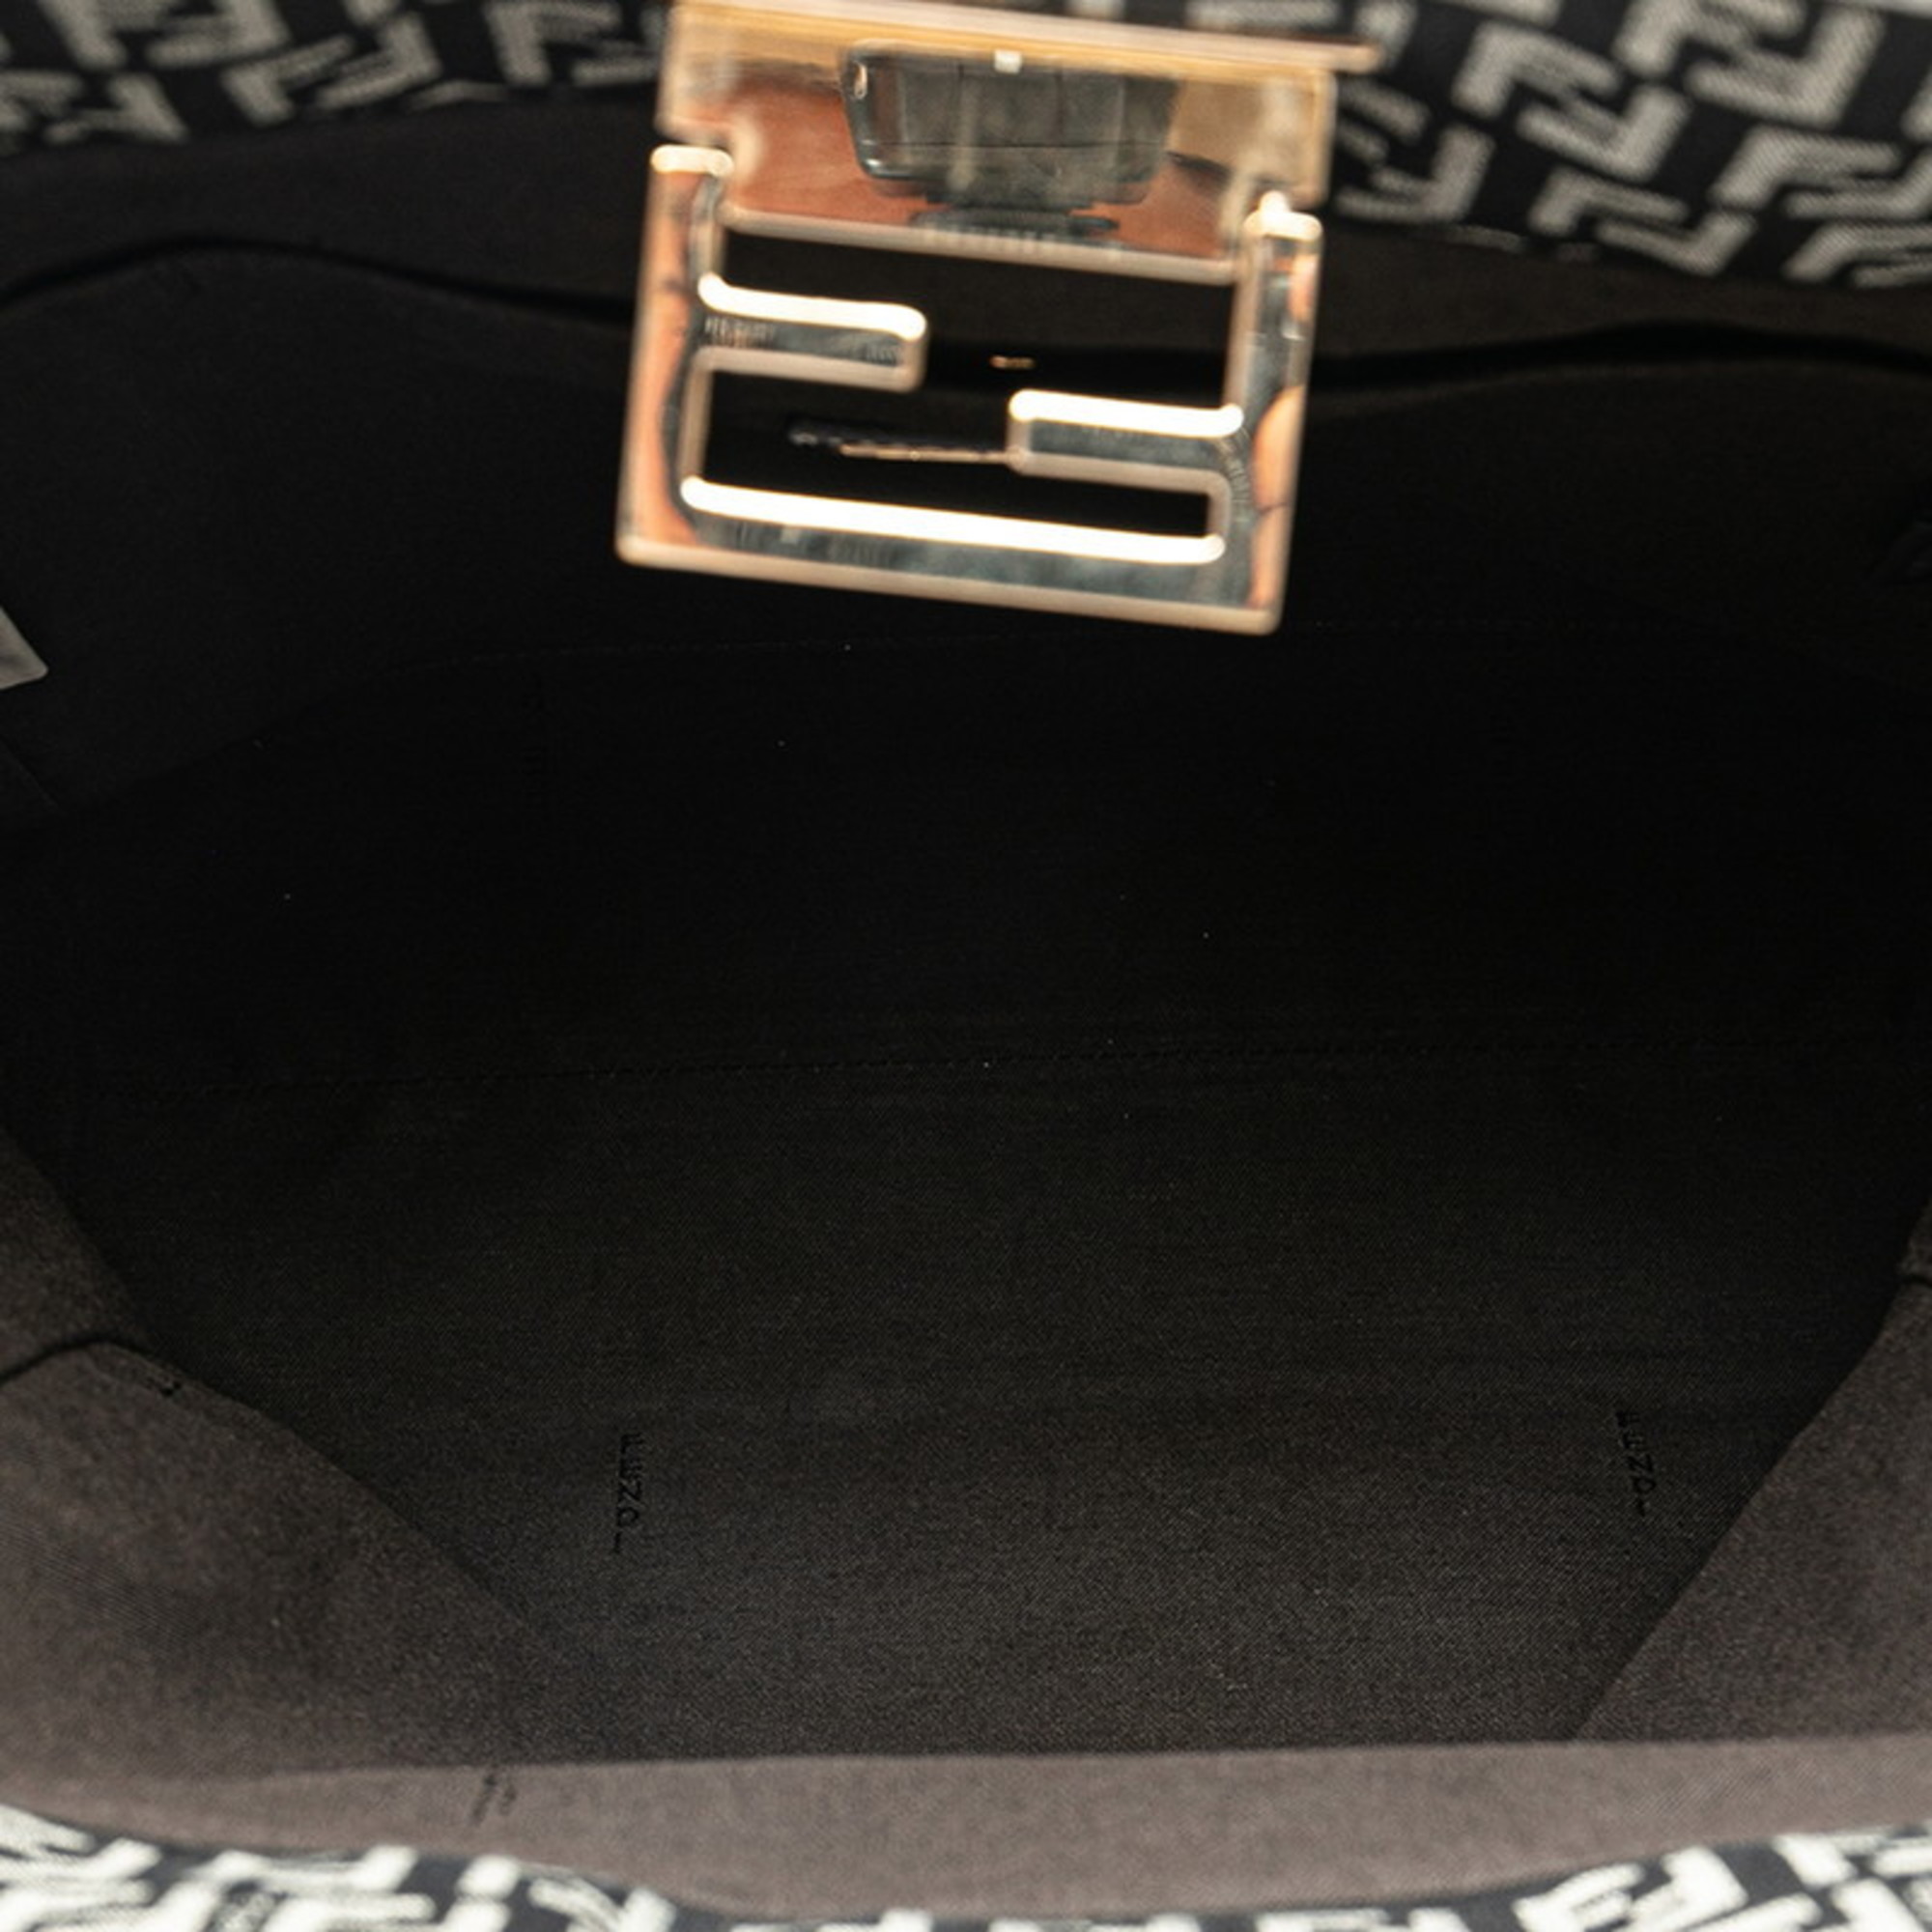 FENDI ZUCCA Handbag Tote Bag 8BH174 Black White Canvas Leather Women's